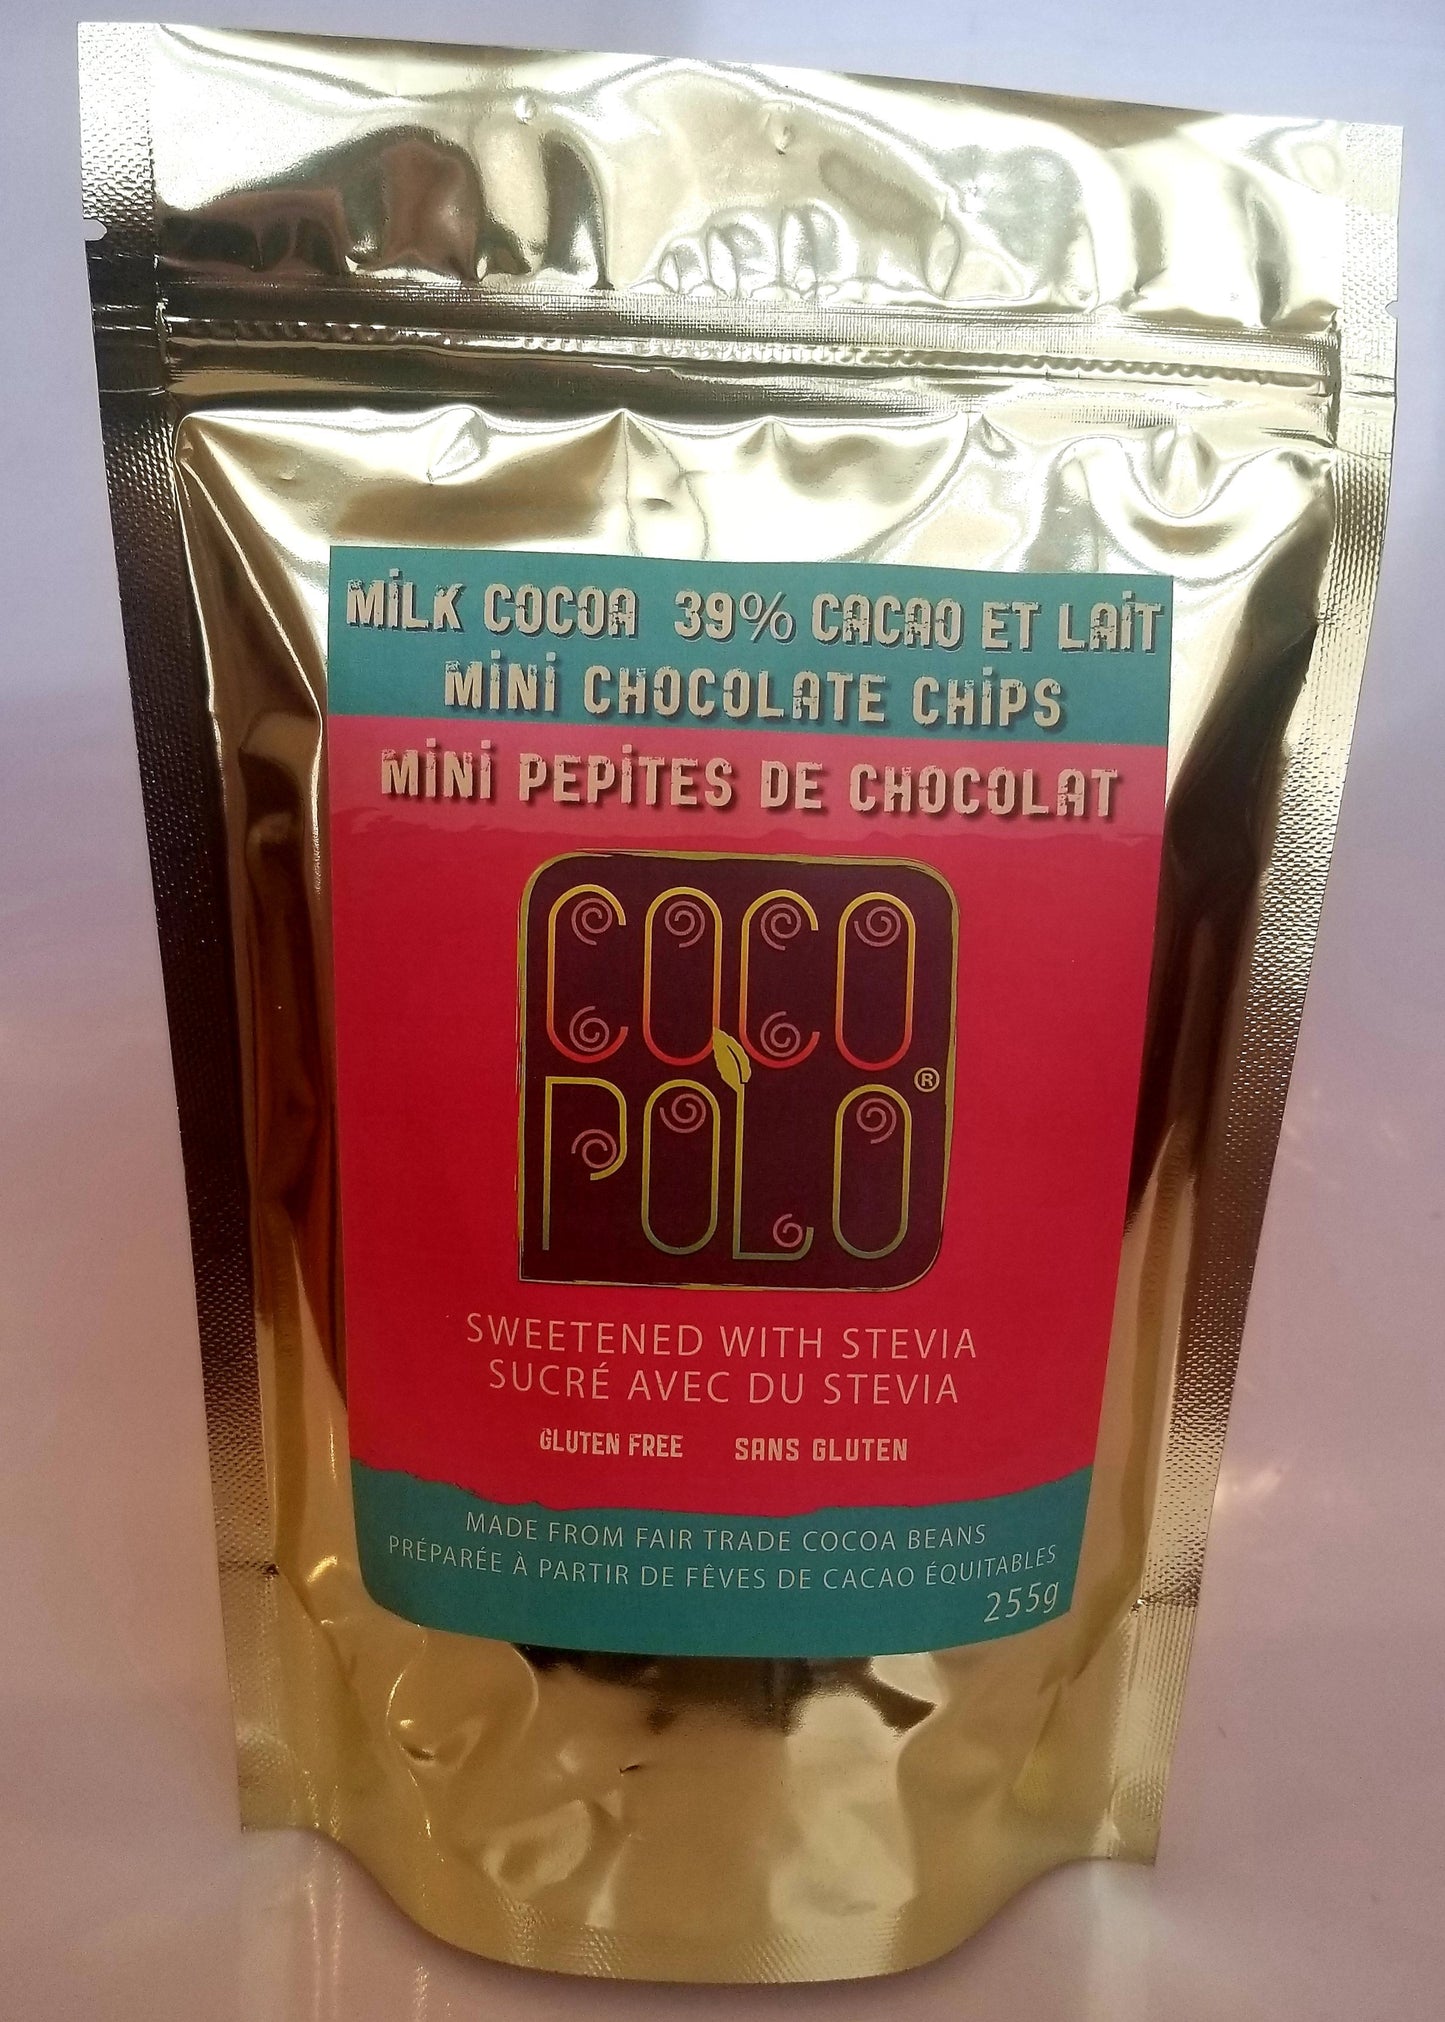 1 Coco Polo keto friendly Mini Chocolate Chips on SwitchGrocery Canada